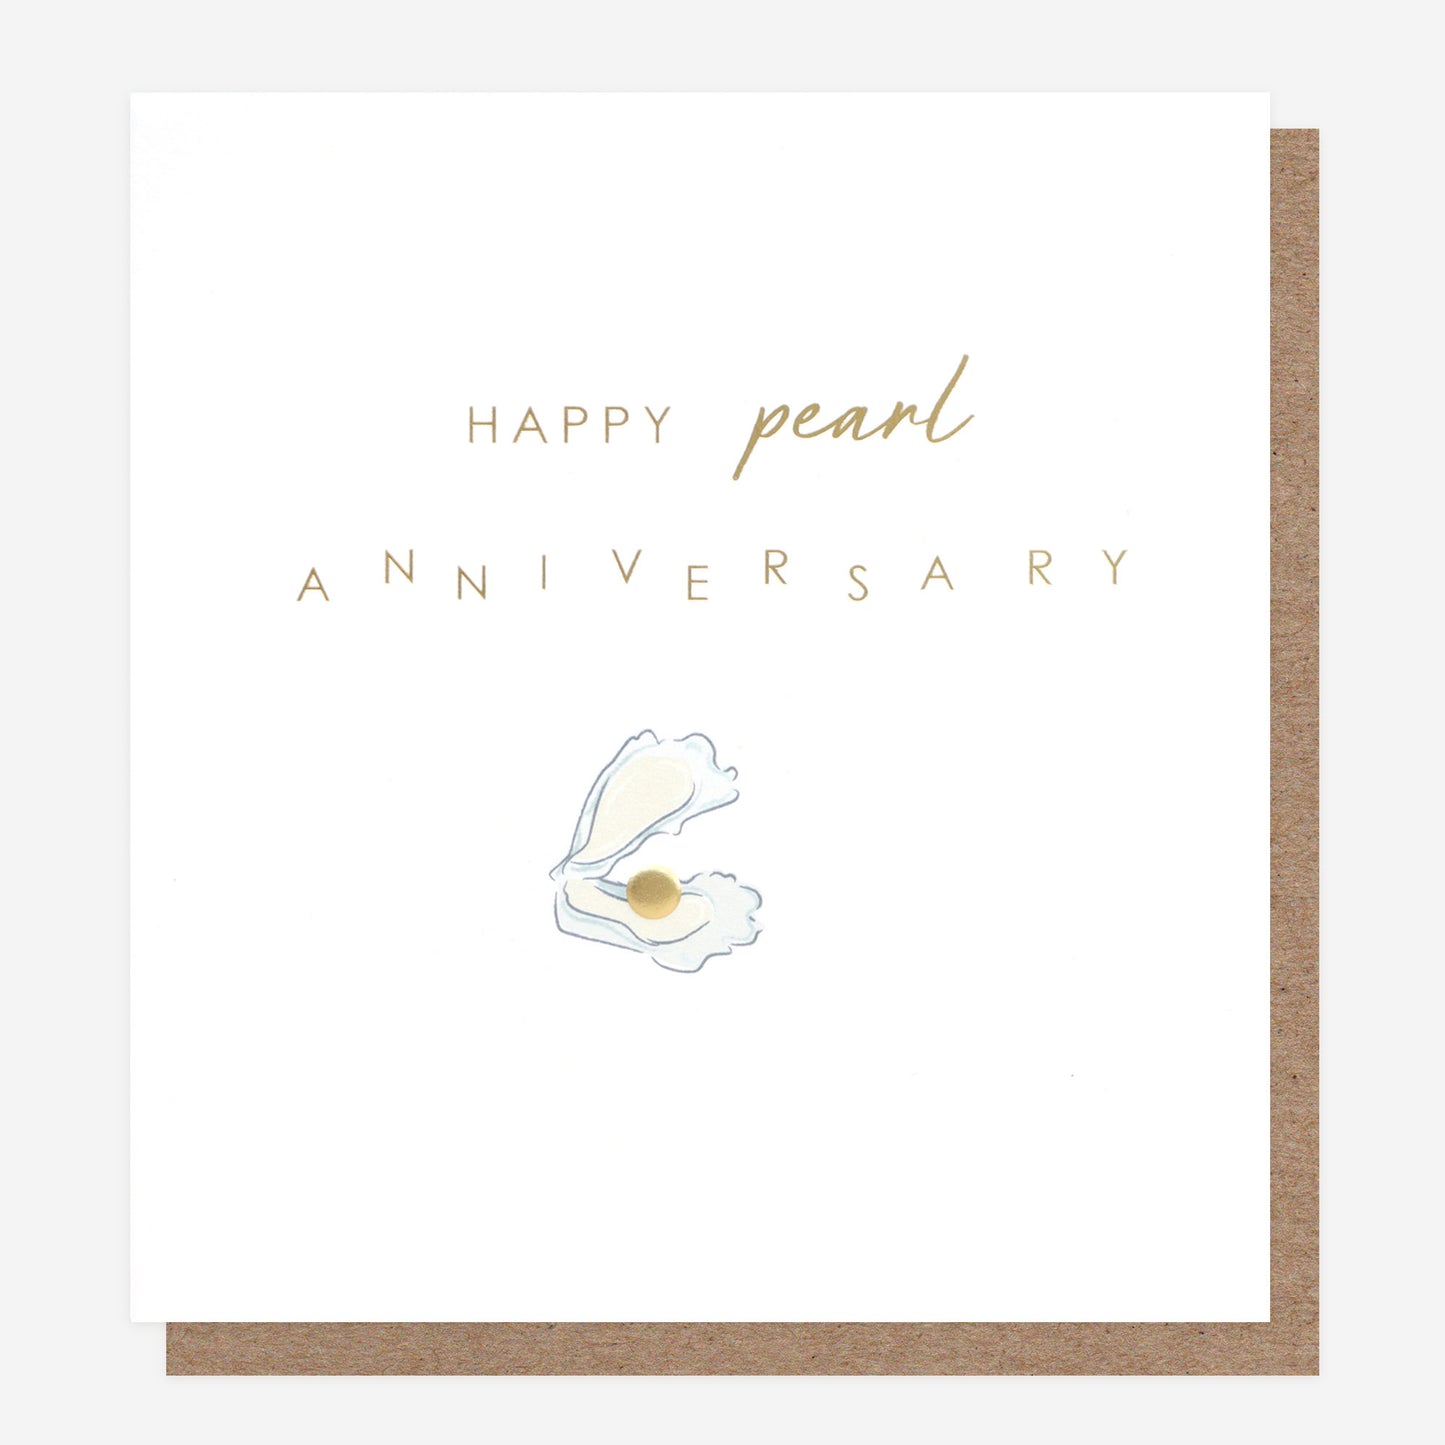 Happy Pearl Anniversary Greetings Card